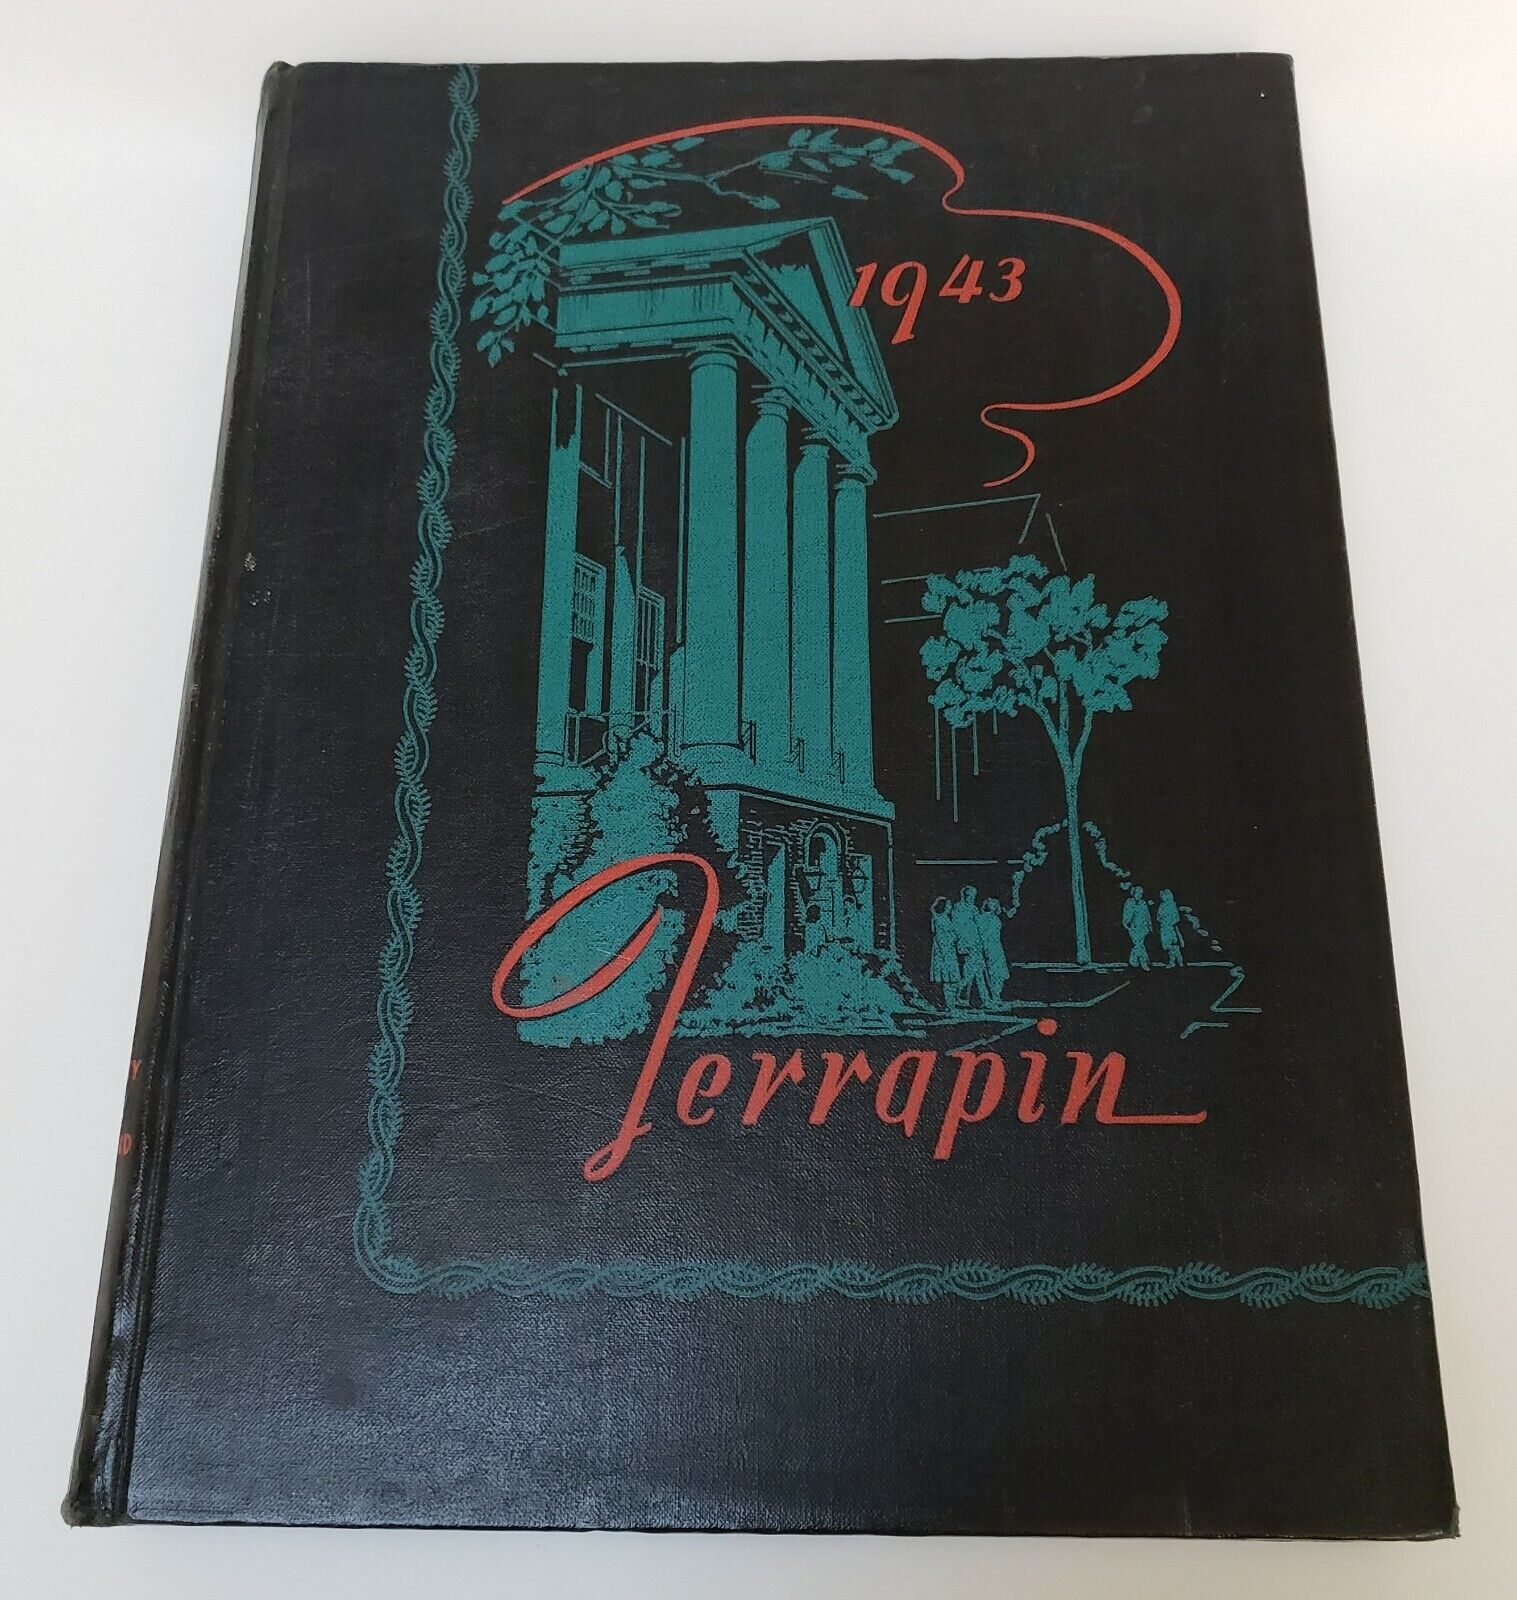 University of Maryland Terrapin College Yearbook 1943 